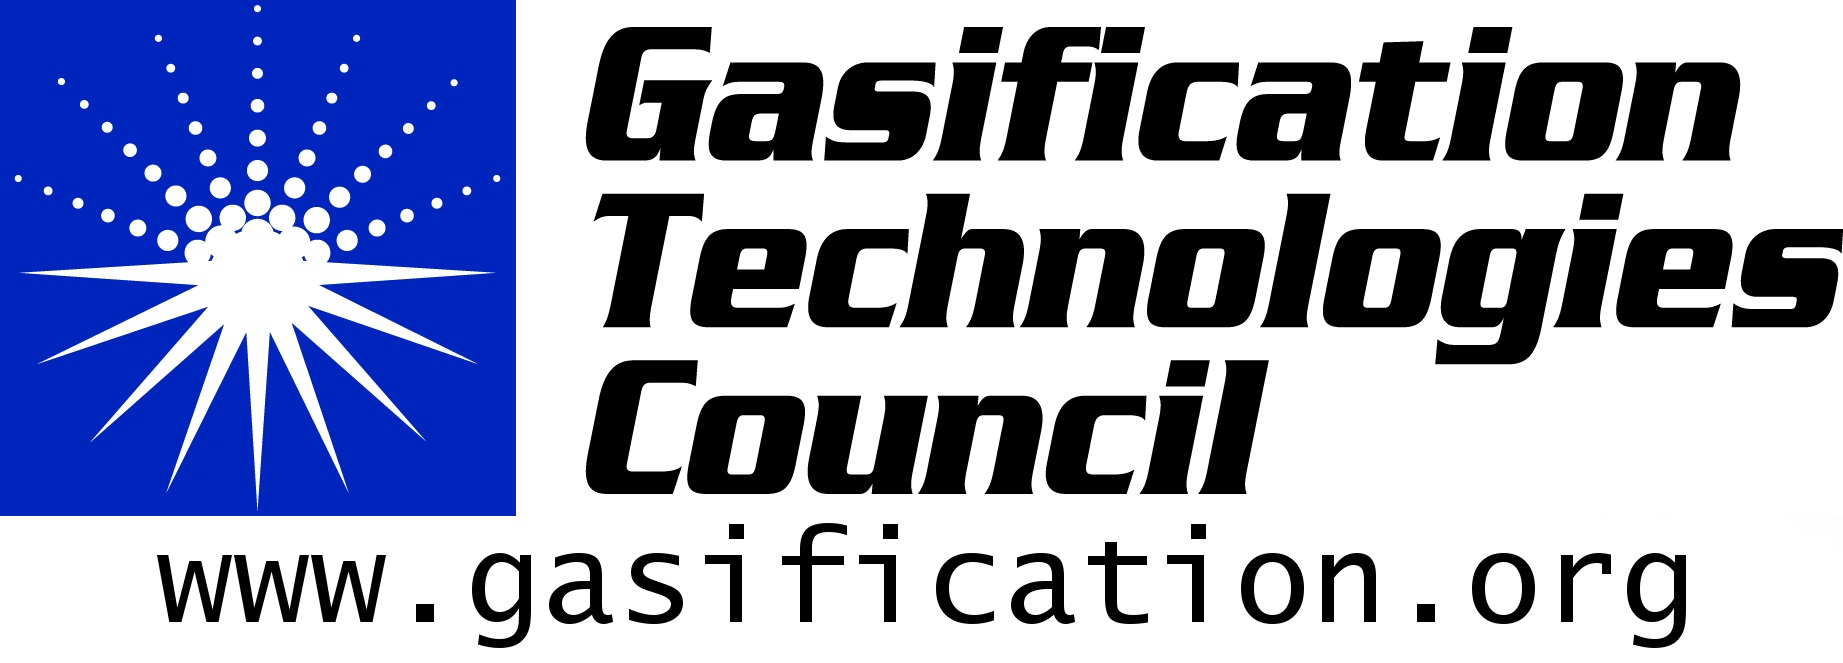 Gasification Tech Council